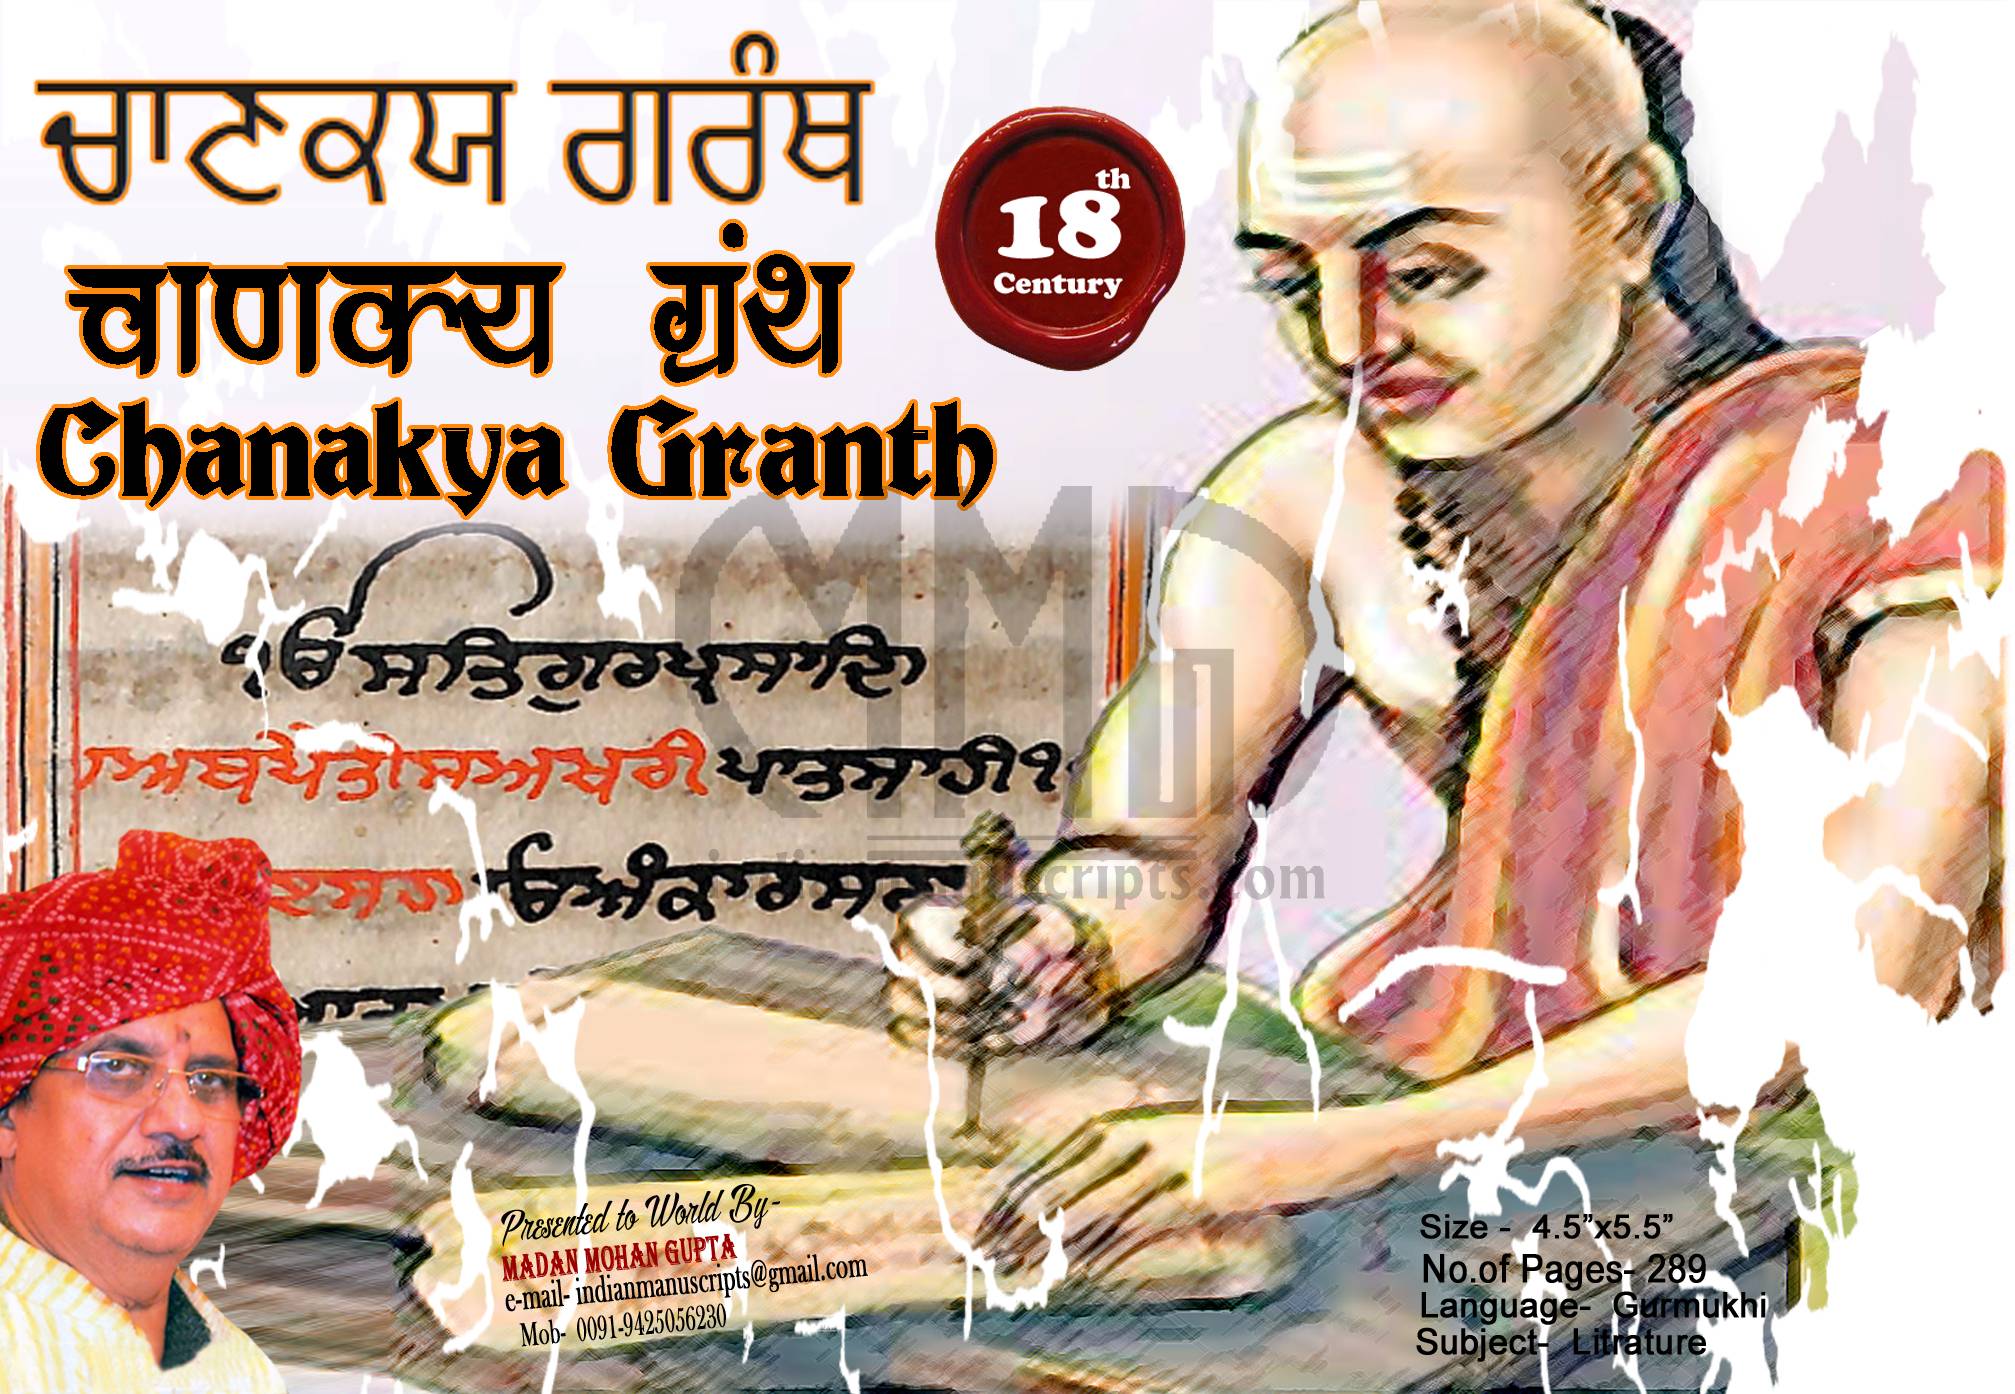 Chanakya Granth